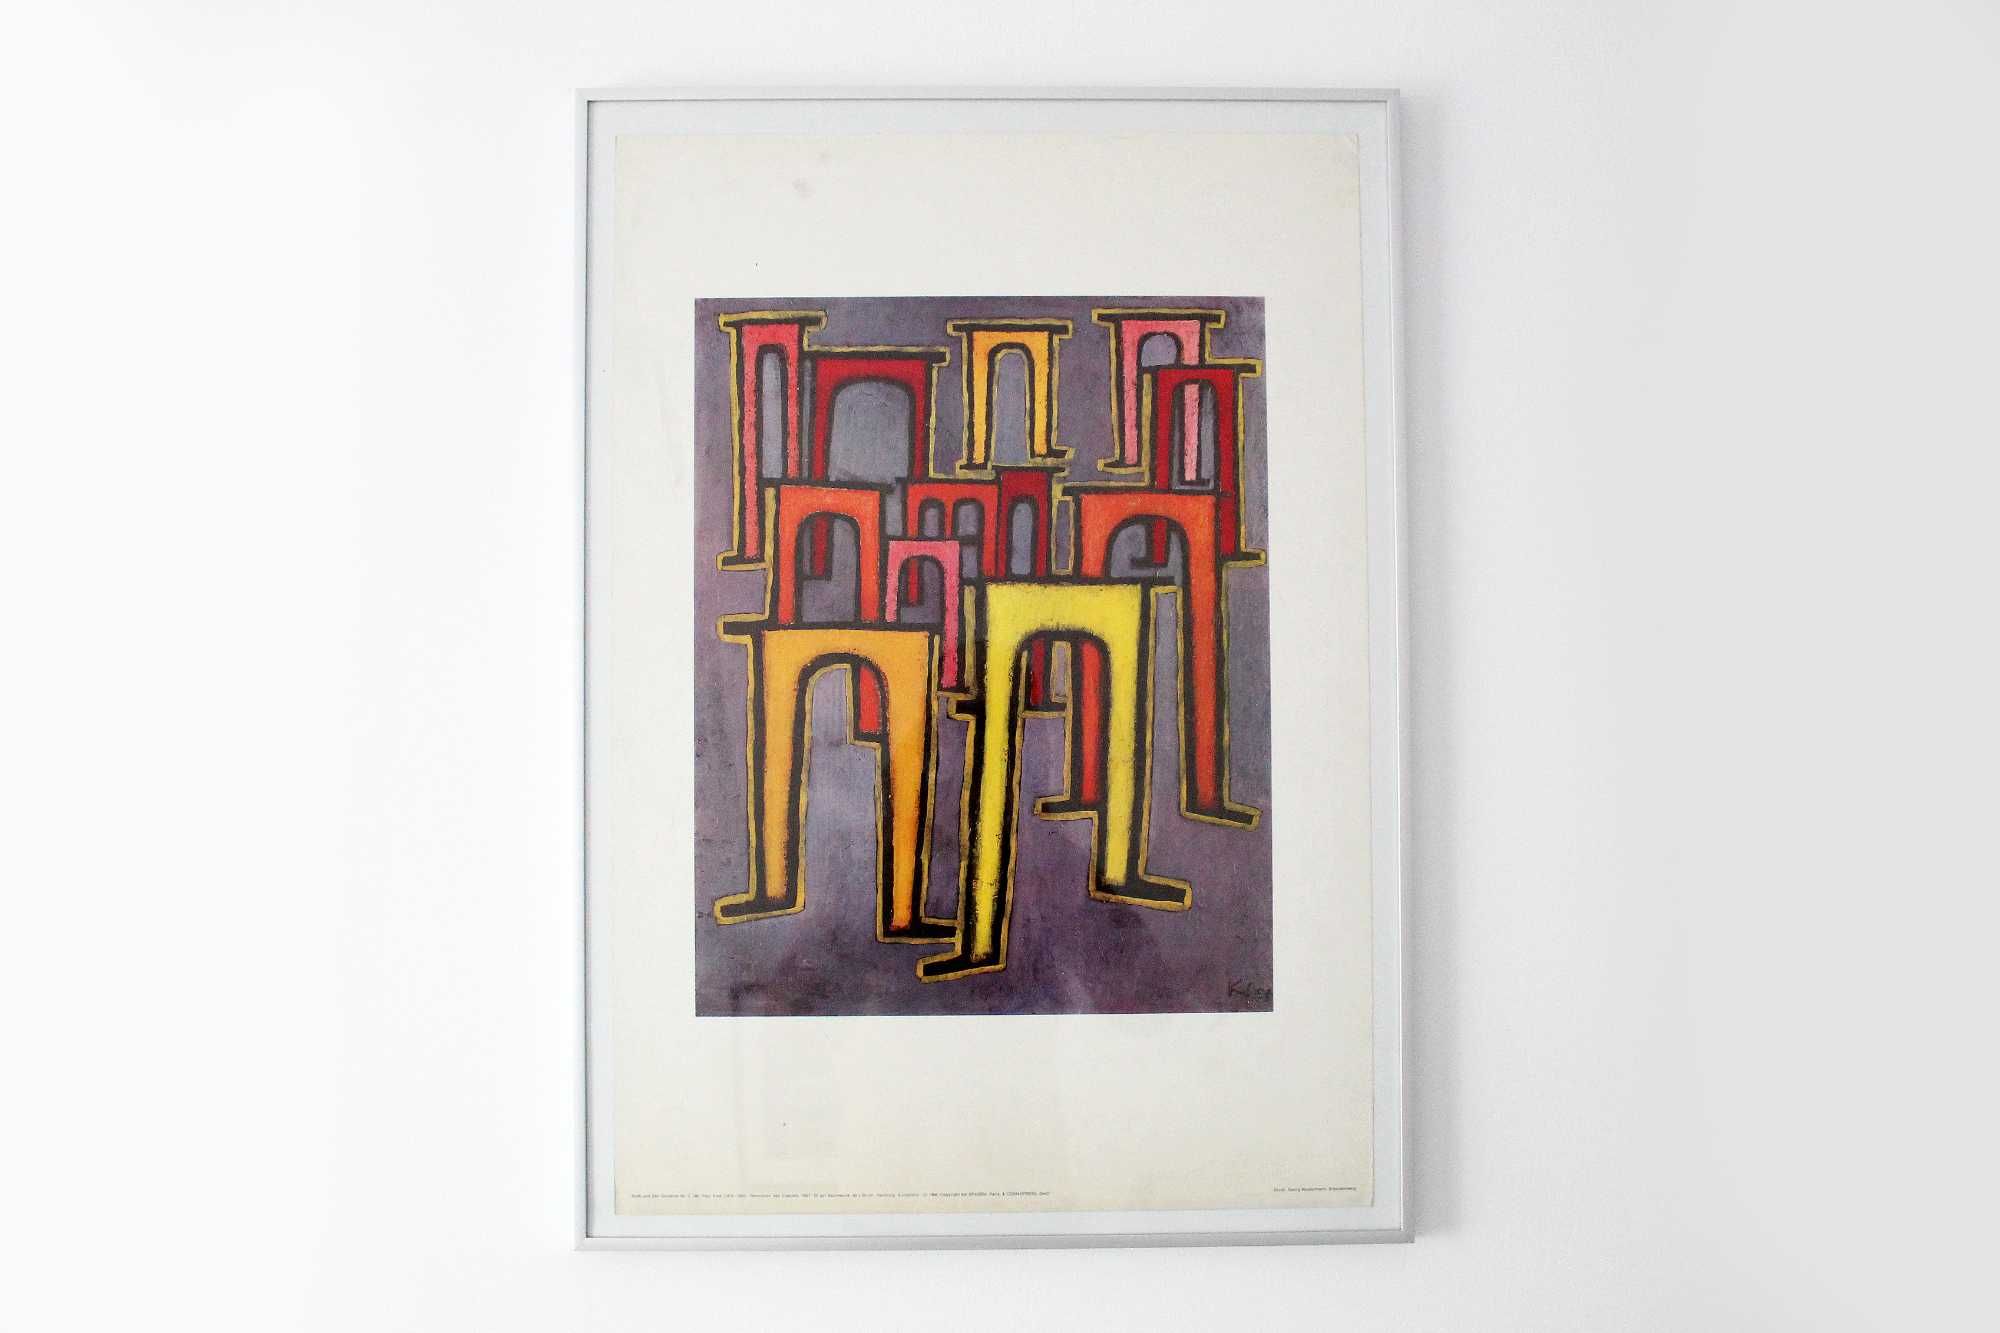 Paul Klee Revolution of the Viaduct arta print offset litografie 1969